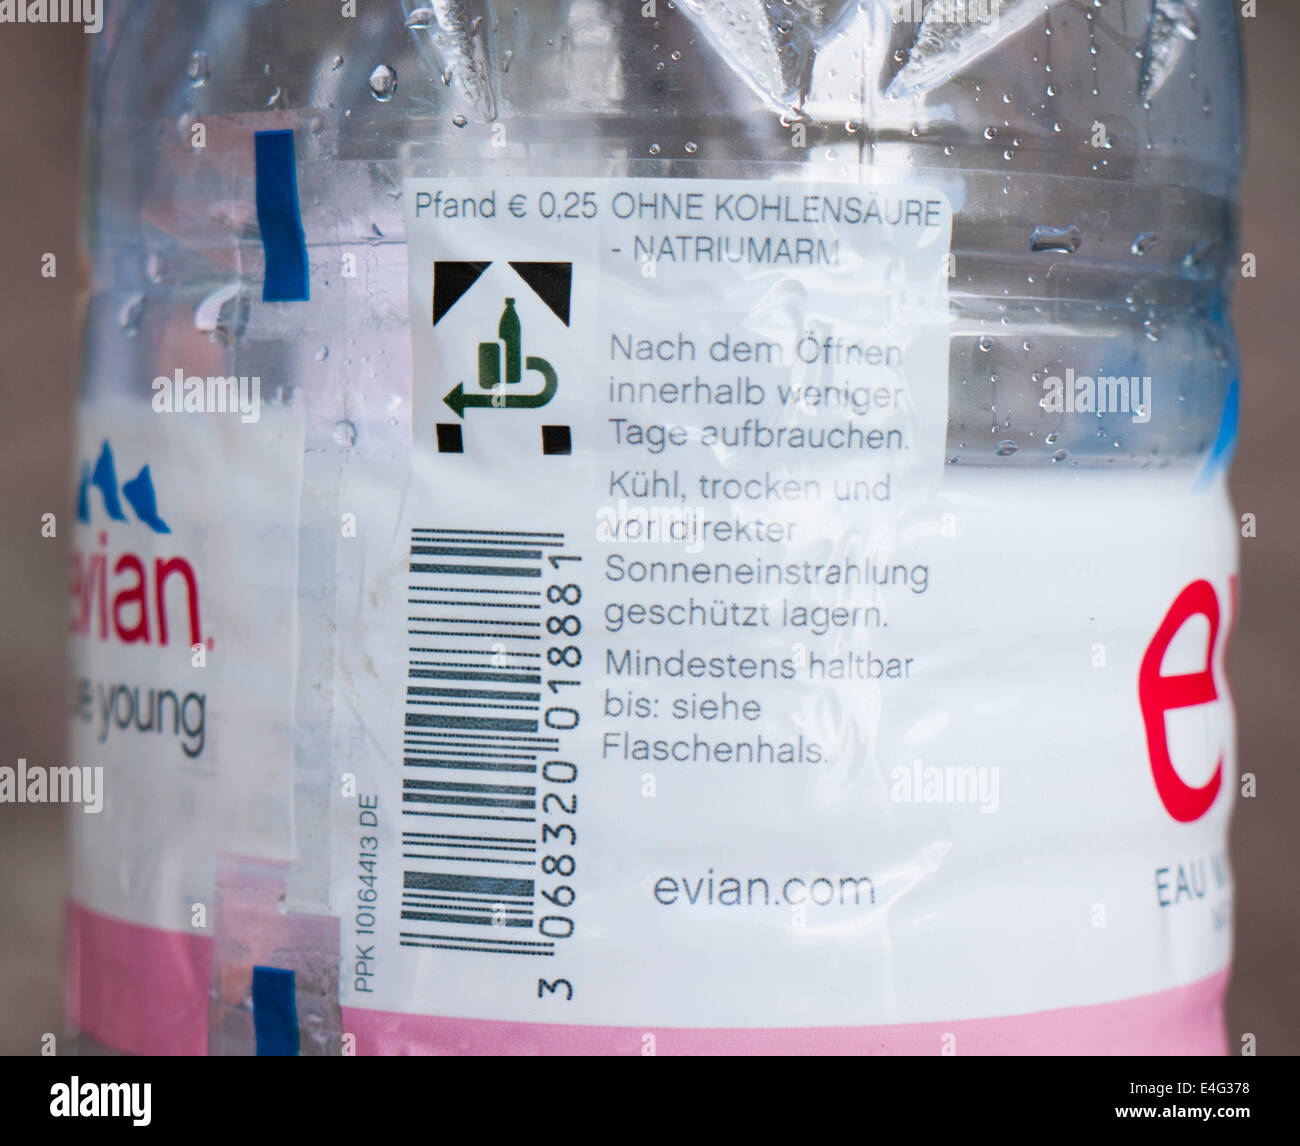 https://c8.alamy.com/comp/E4G378/pfand-or-deposit-on-return-of-a-plastic-water-bottle-in-germany-E4G378.jpg